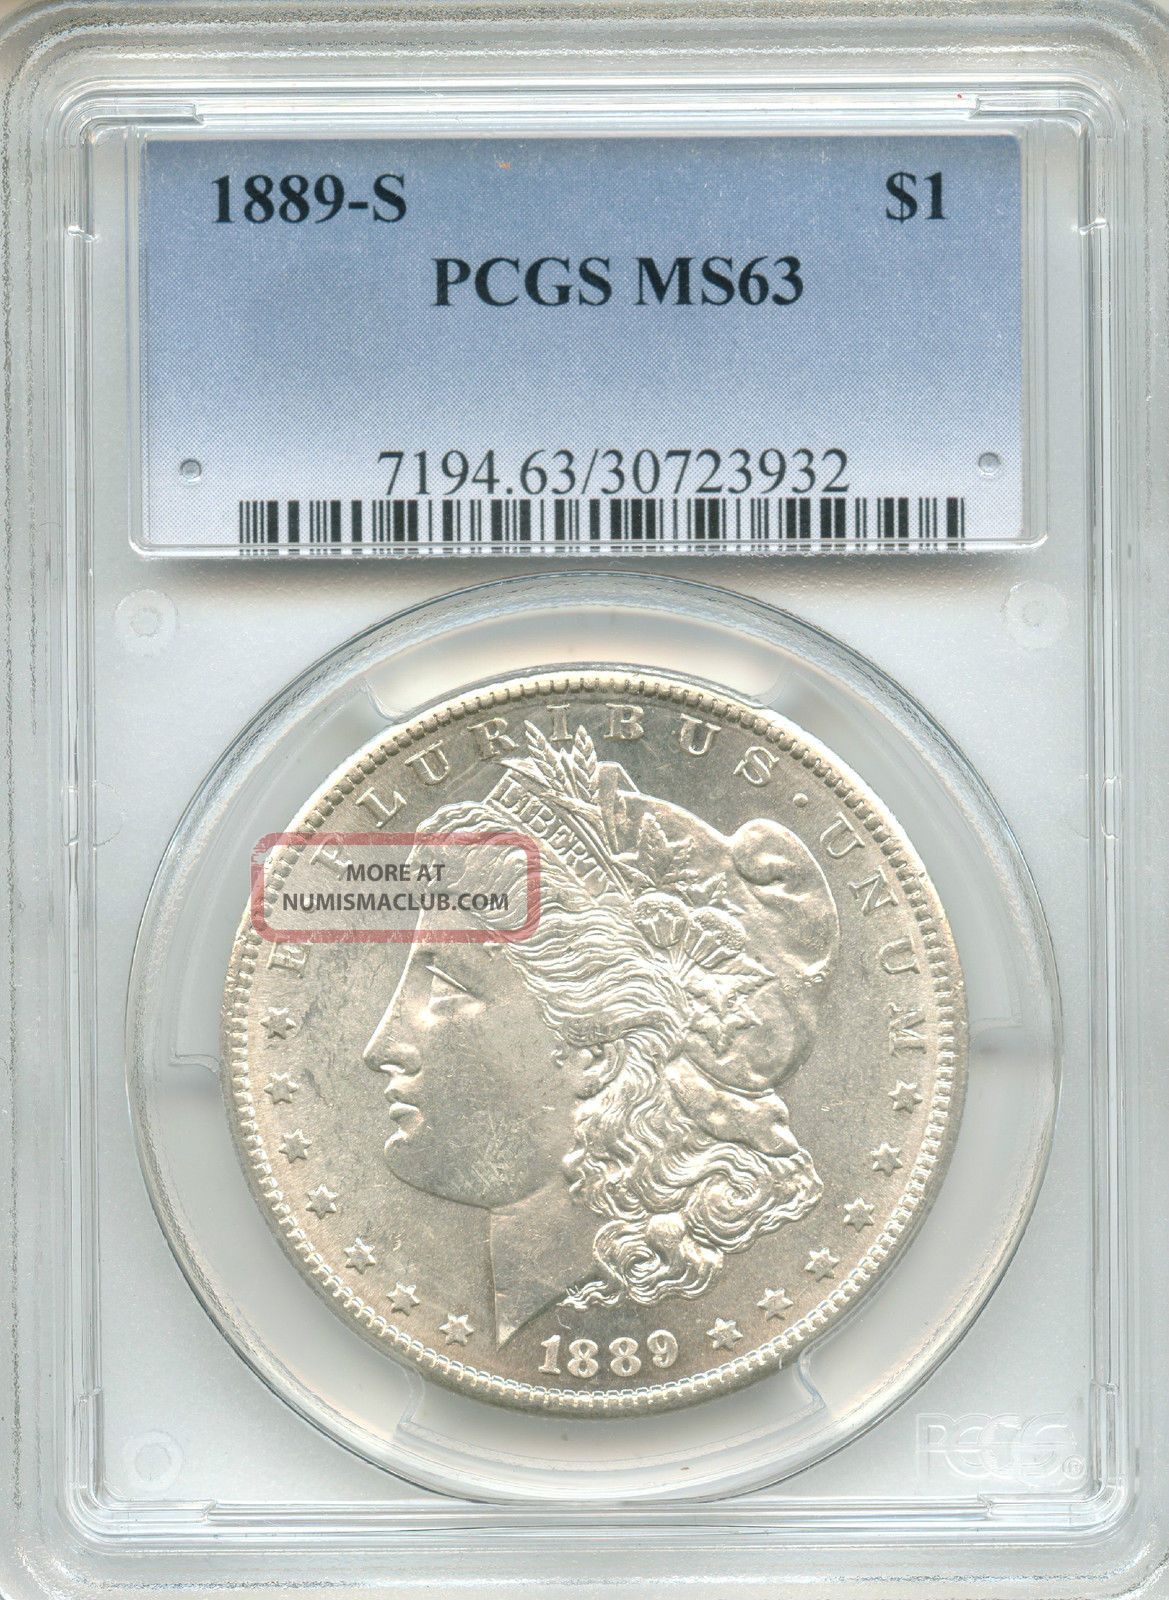 1889 - S Morgan Silver Dollar Pcgs Ms63 $1 (30723932)